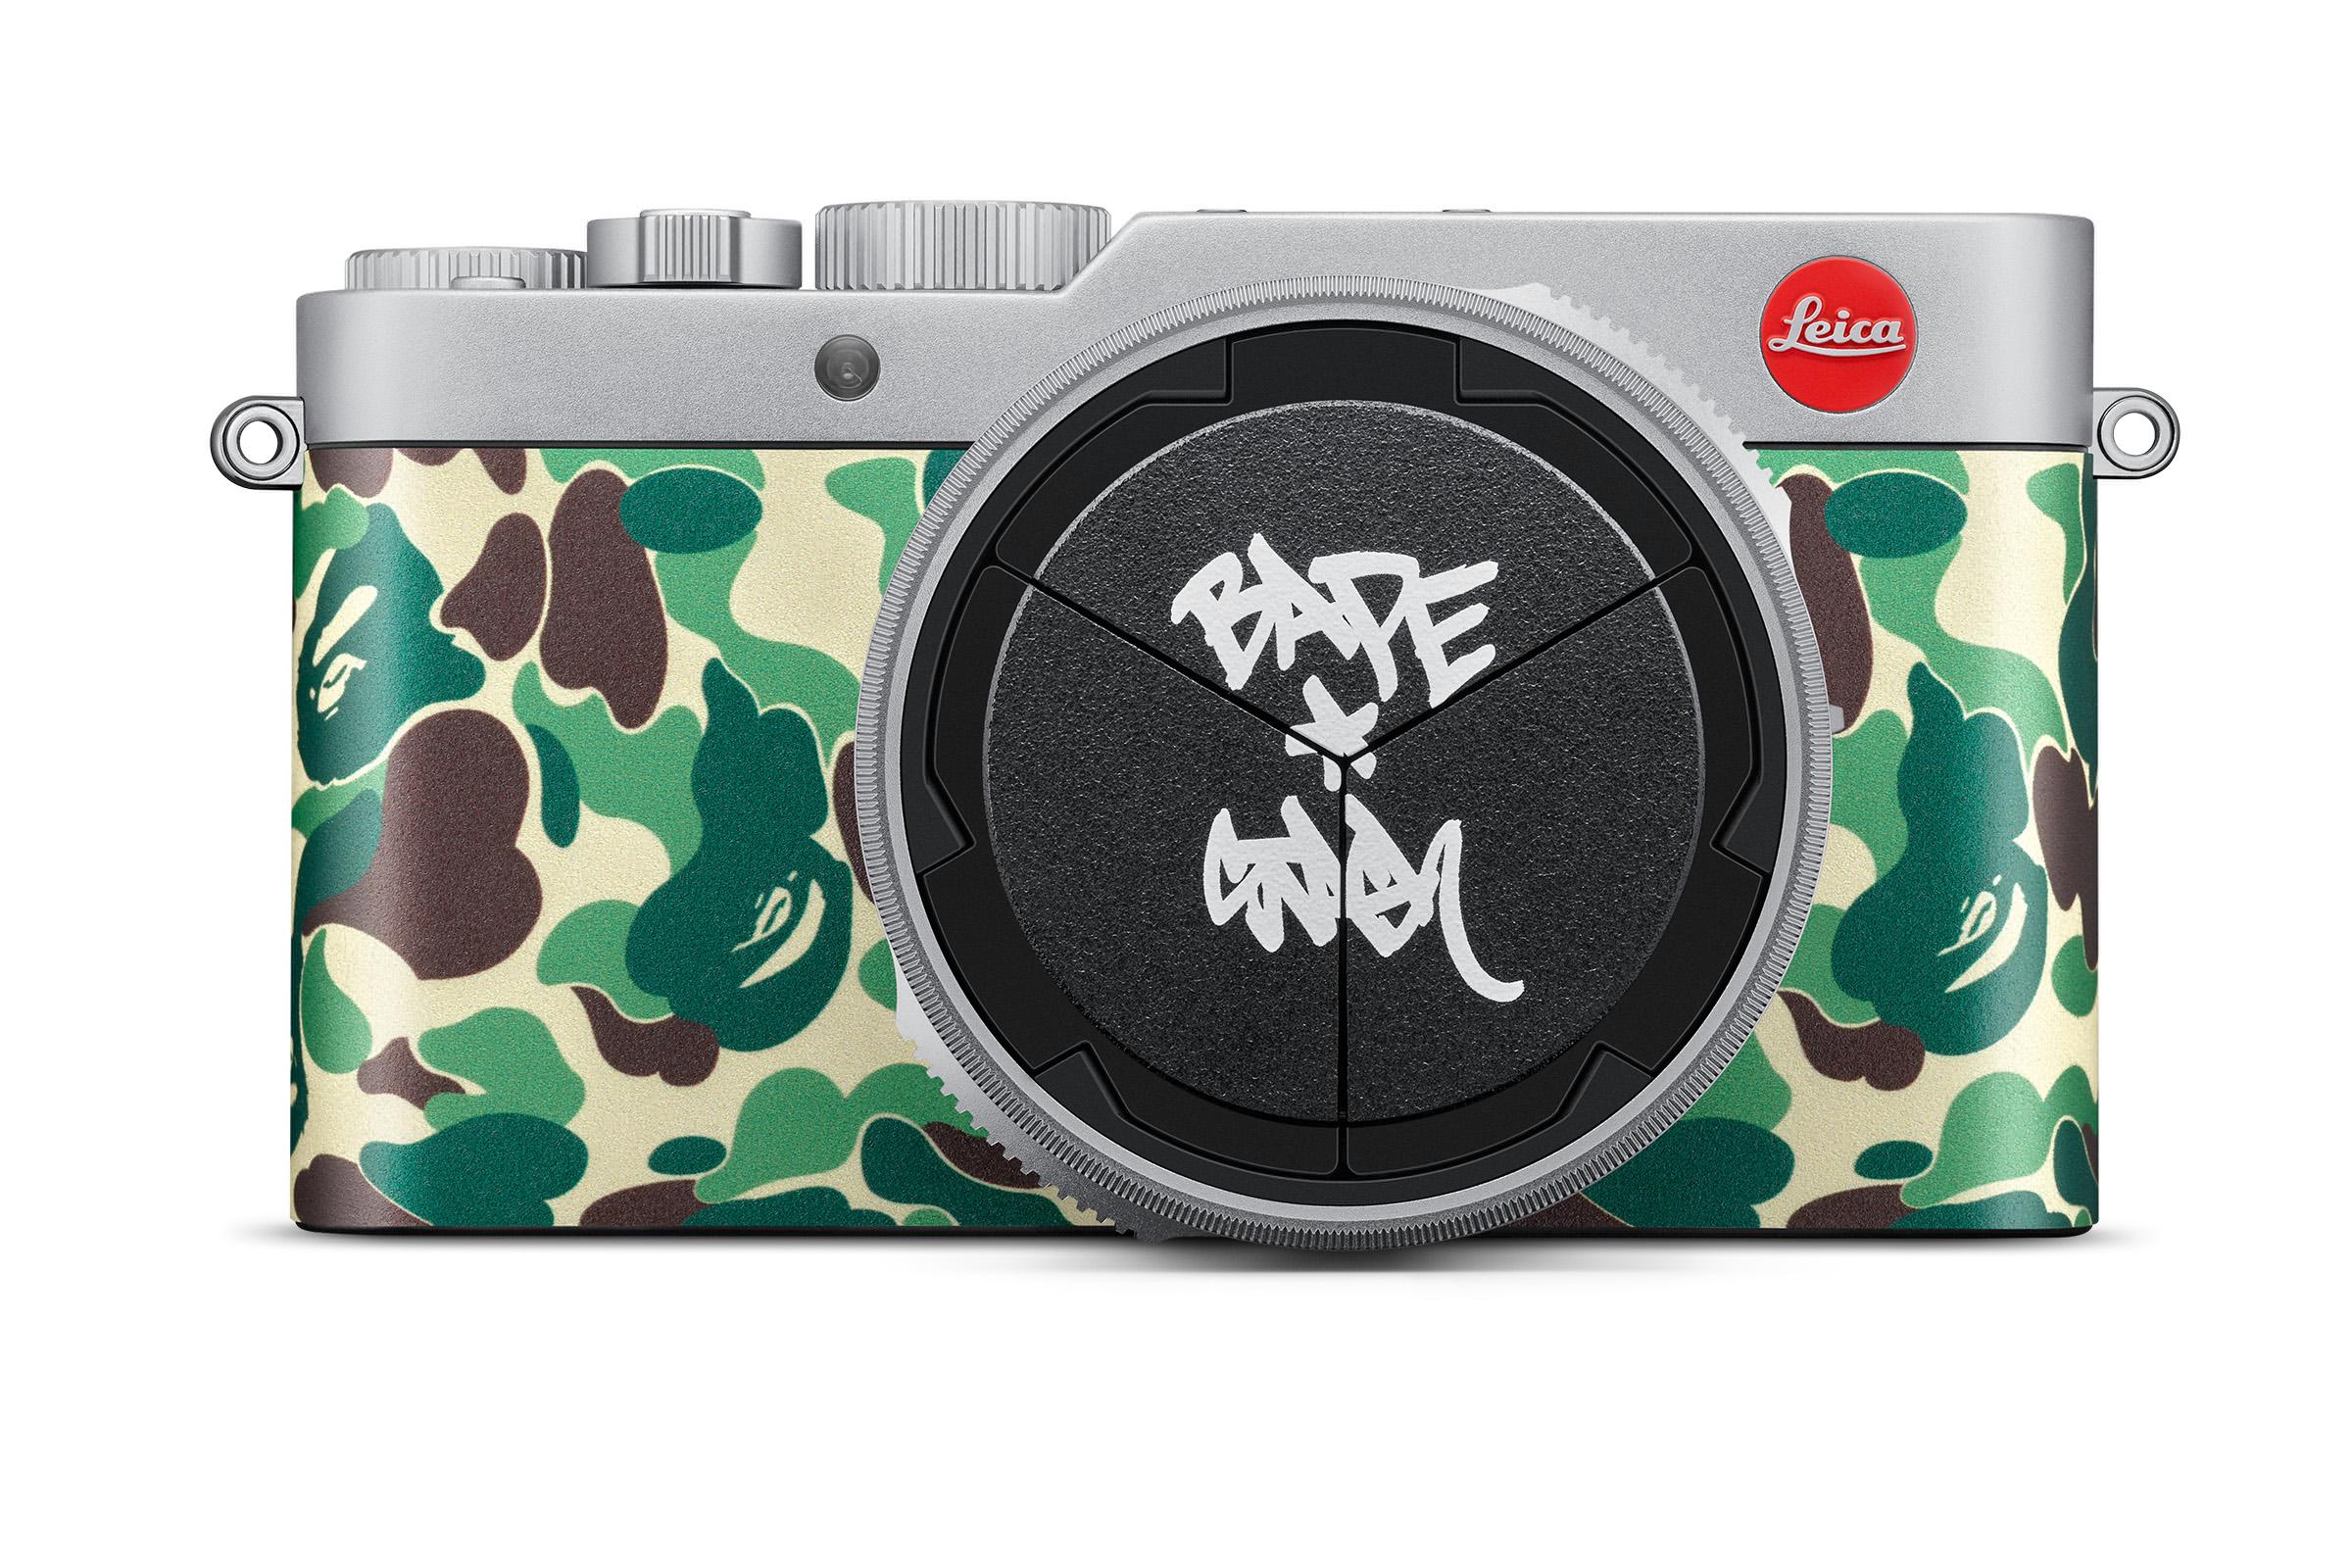 Leica D-Lux 7 Bathing Ape X Stash Limited Edition - Macfilos